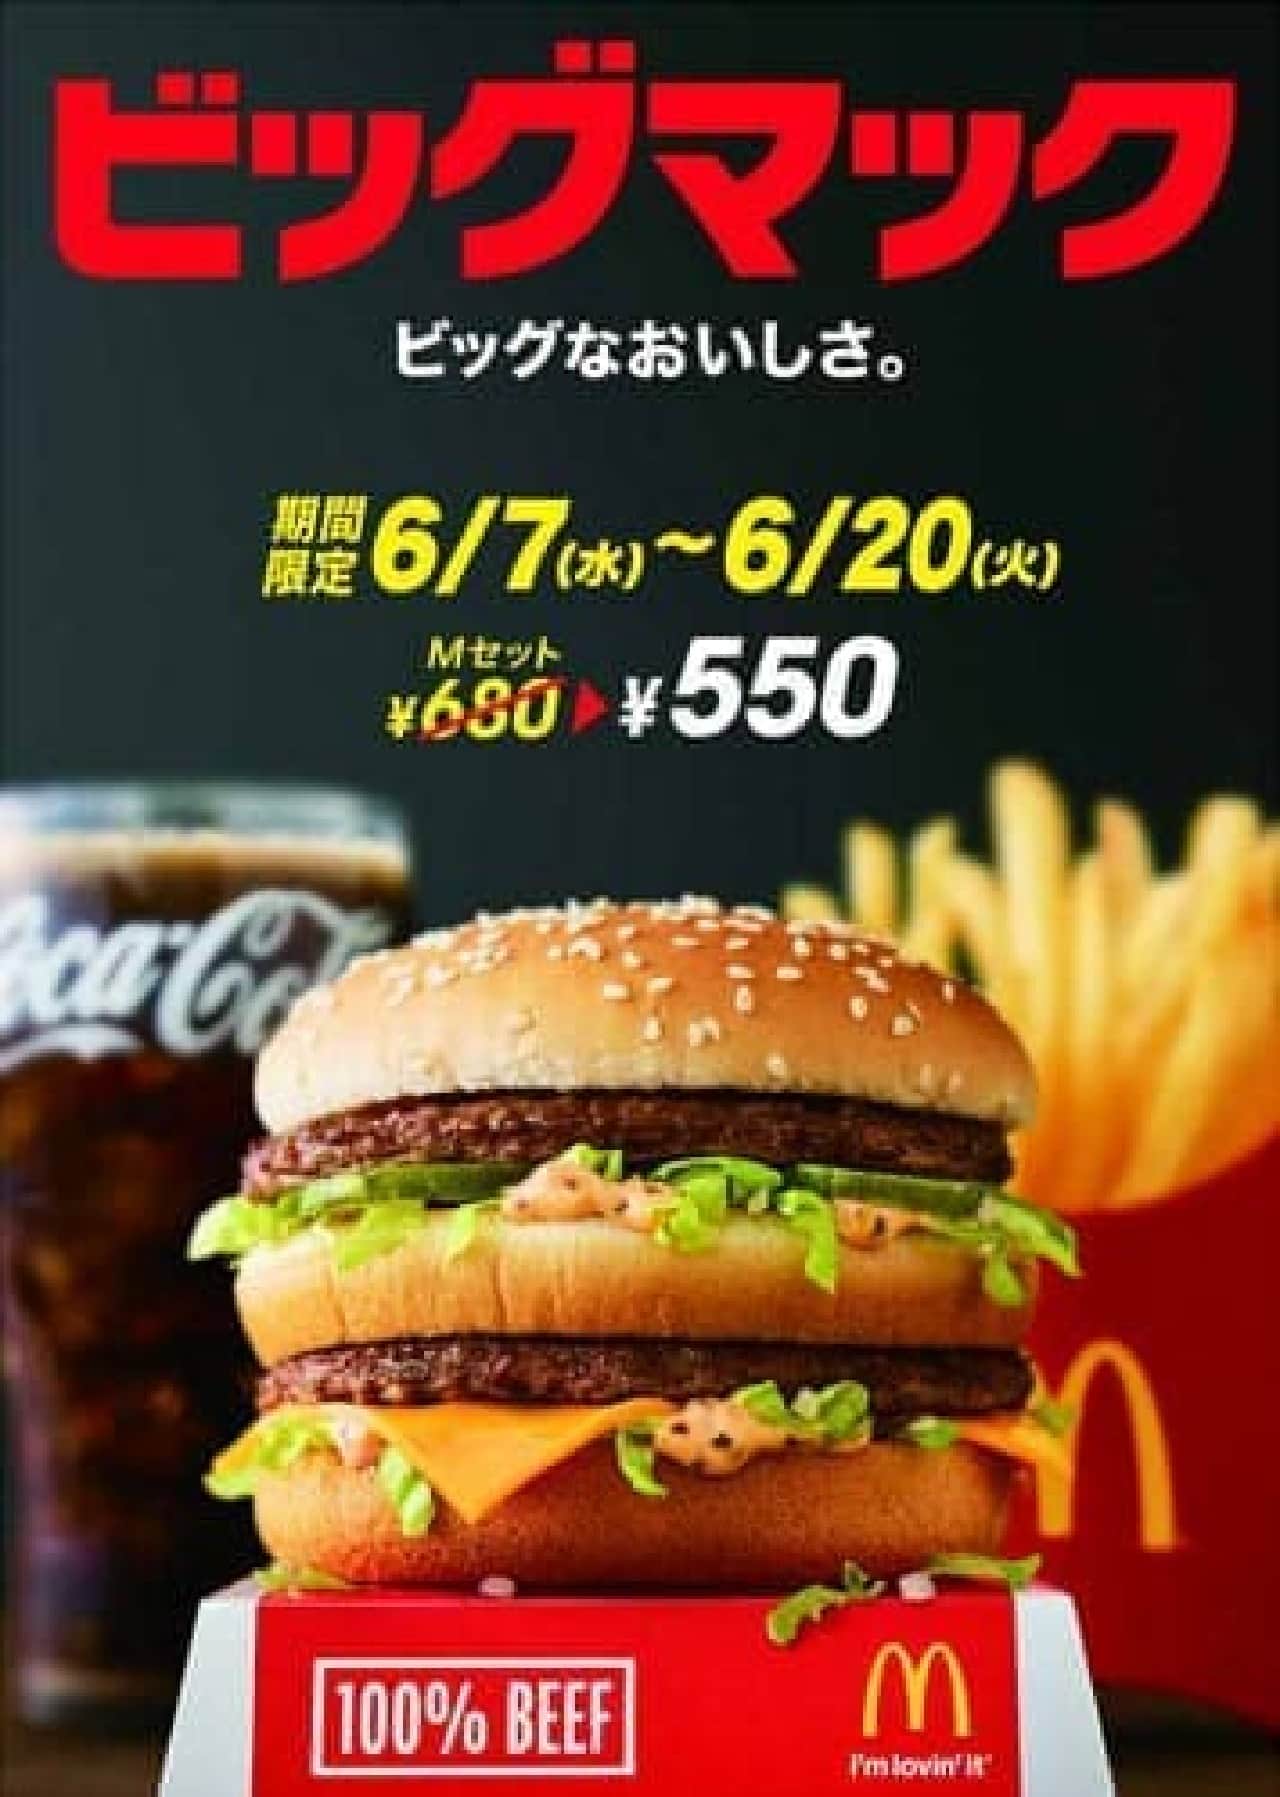 "Giga Big Mac" "Grand Big Mac" revived for a limited time